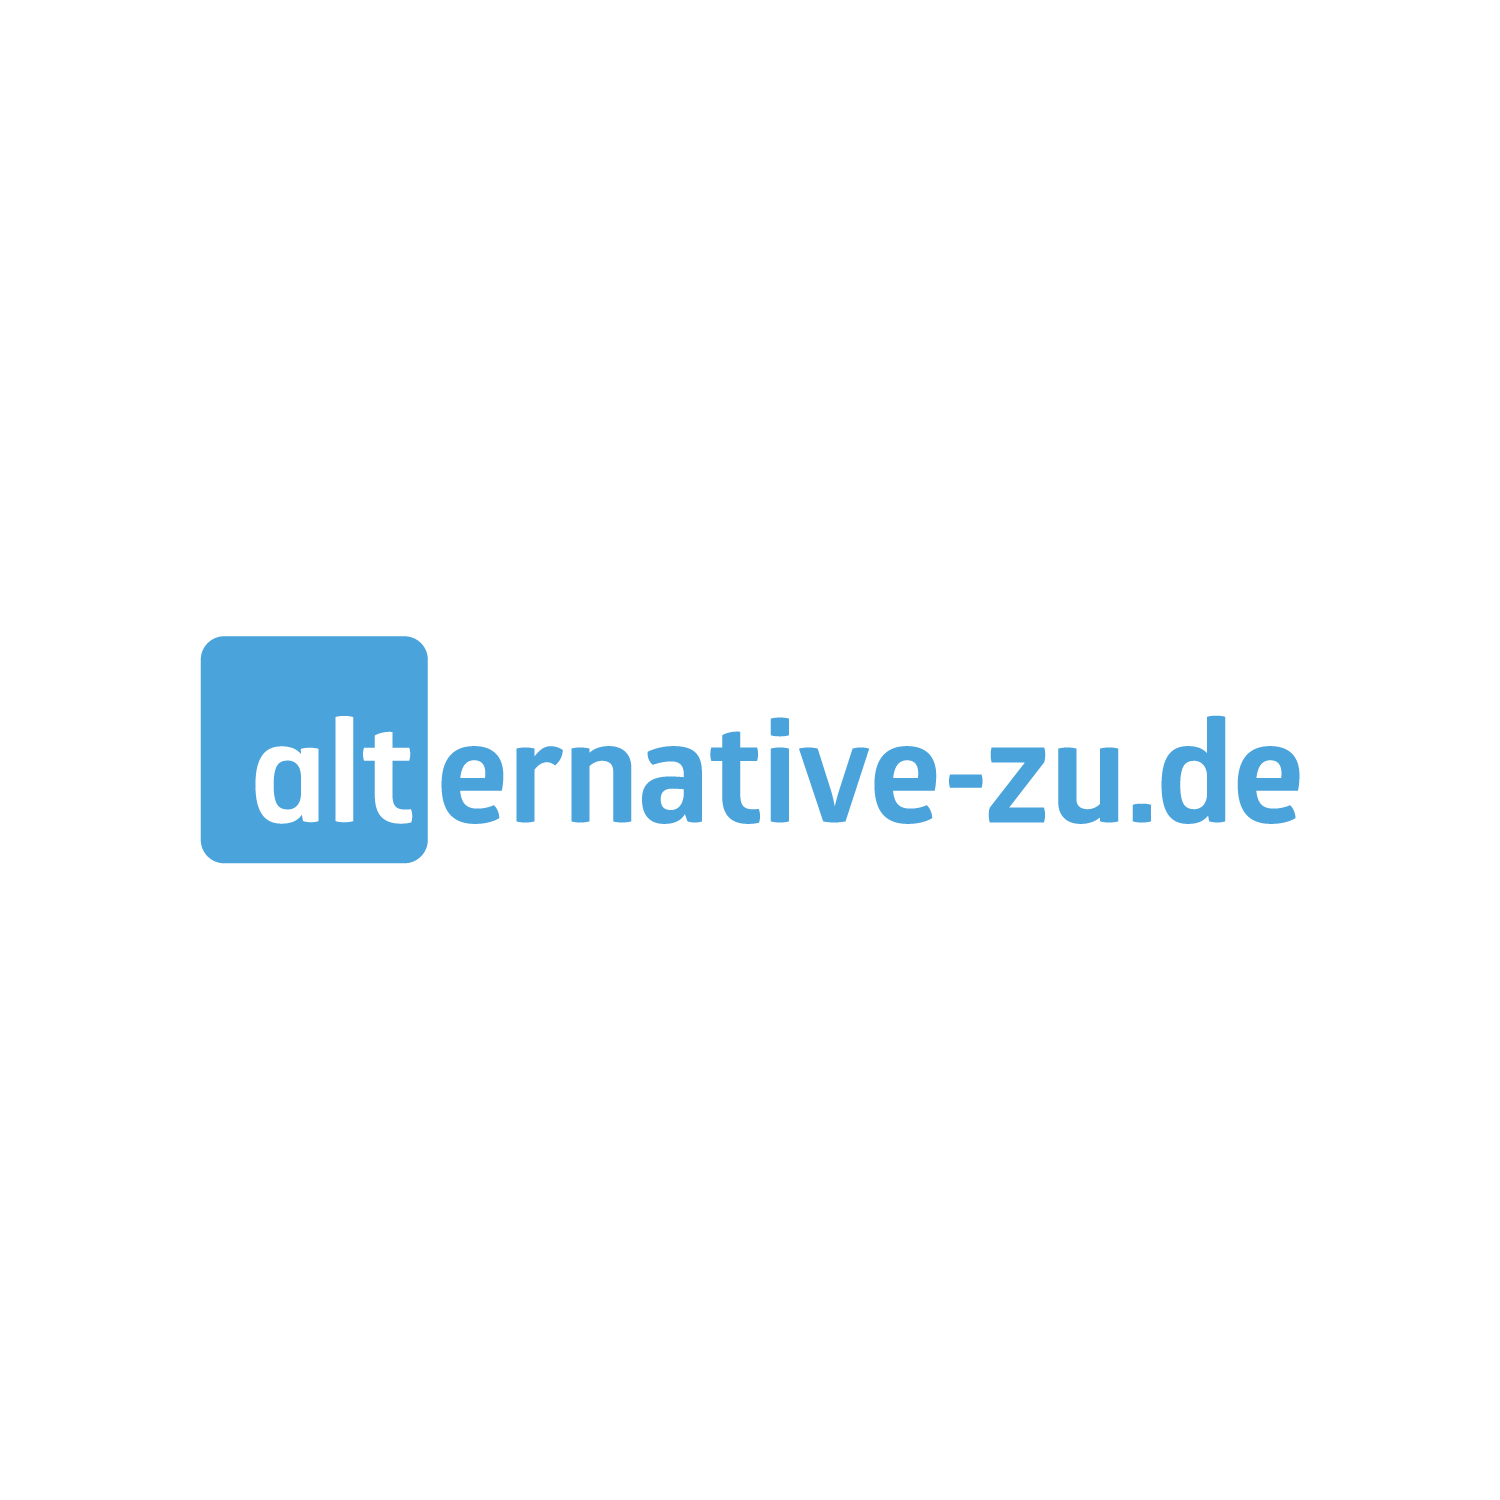 (c) Alternative-zu.de